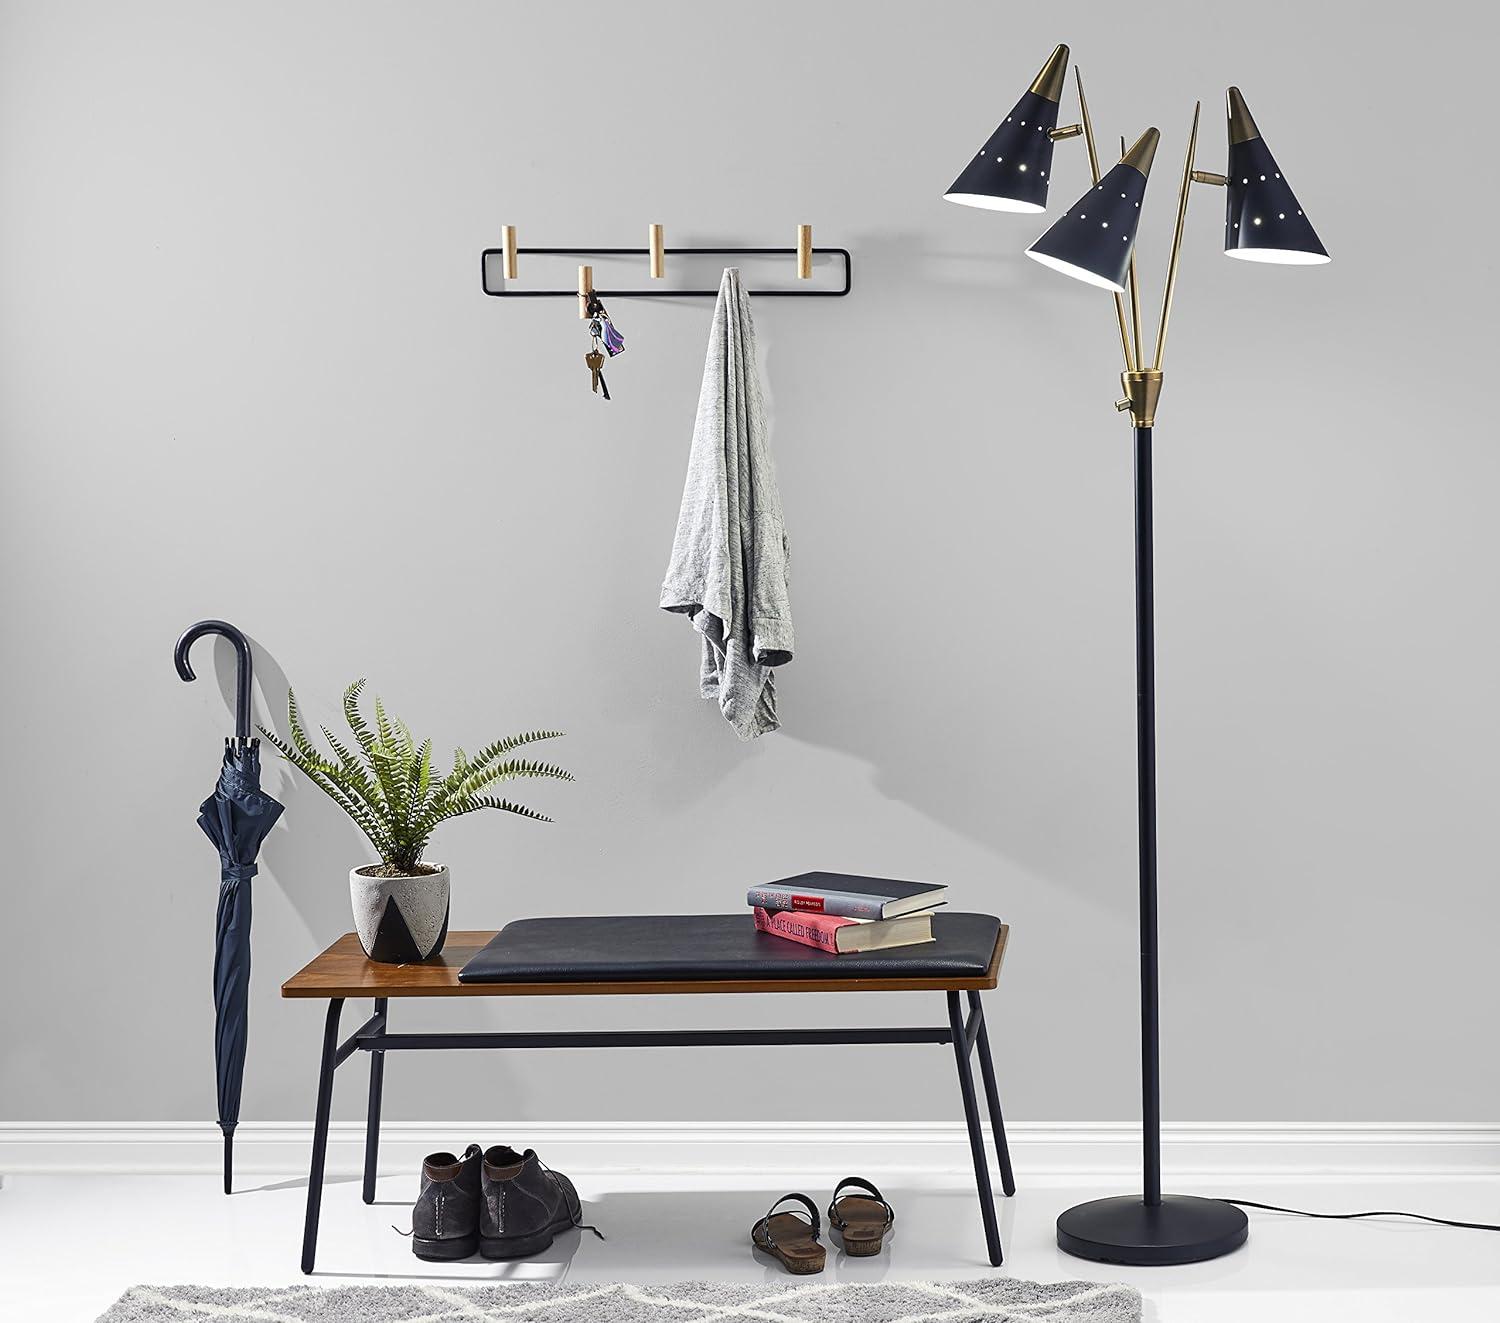 Nadine Matte Black and Antique Brass 3-Arm Adjustable Floor Lamp